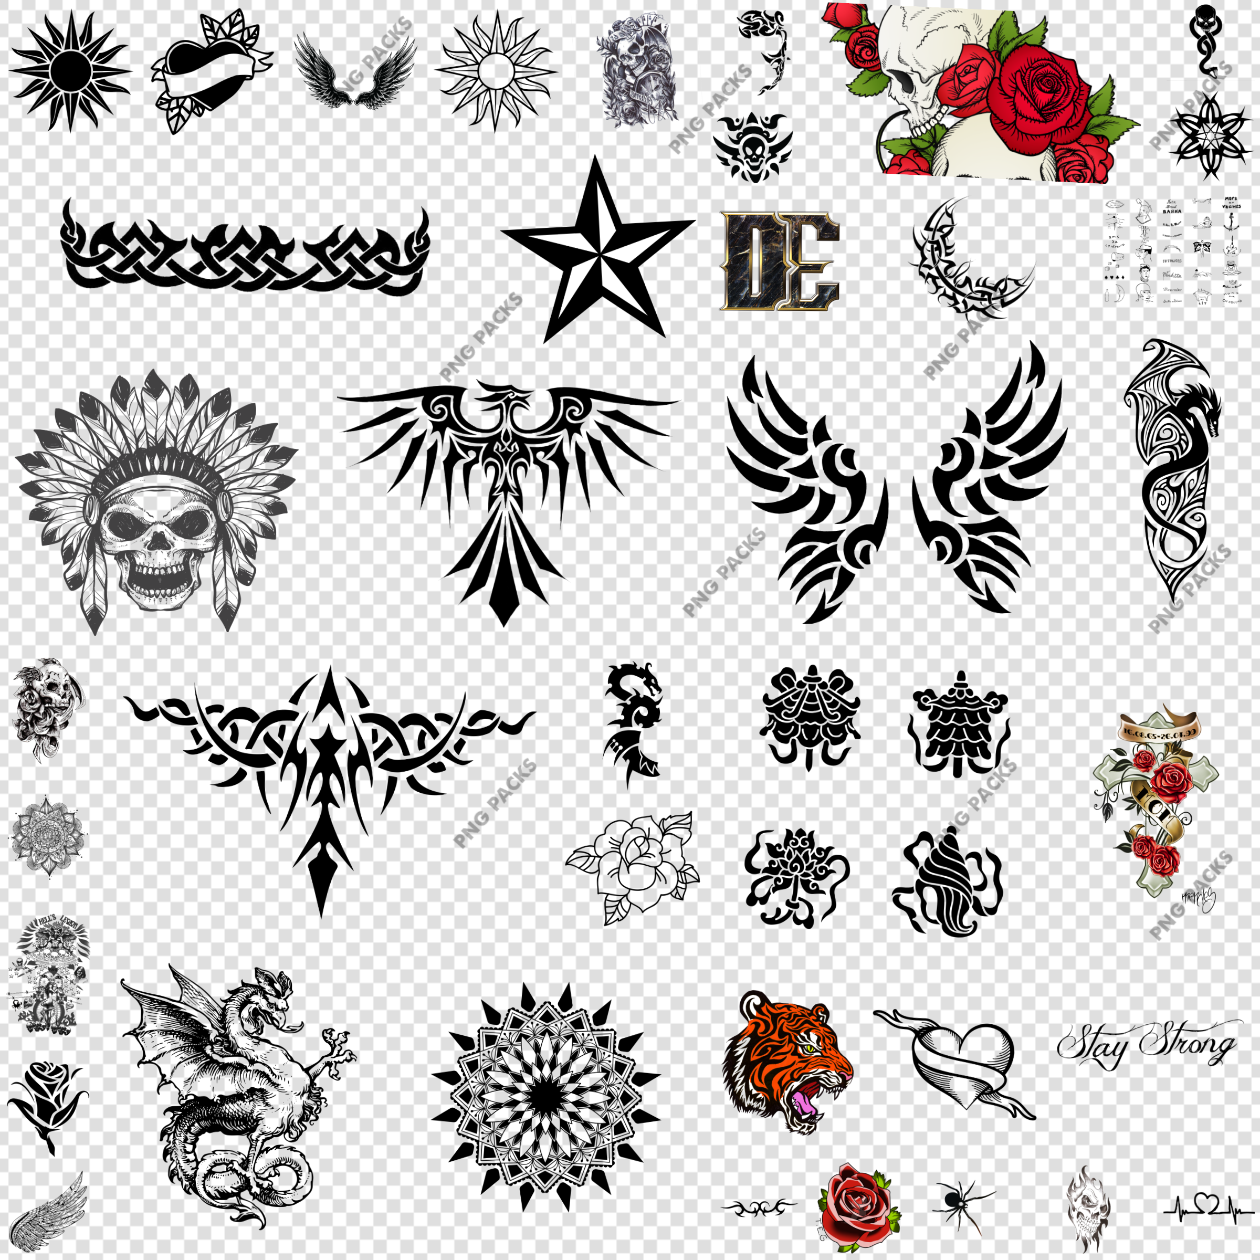 Download Arm Tattoo HQ PNG Image  FreePNGImg